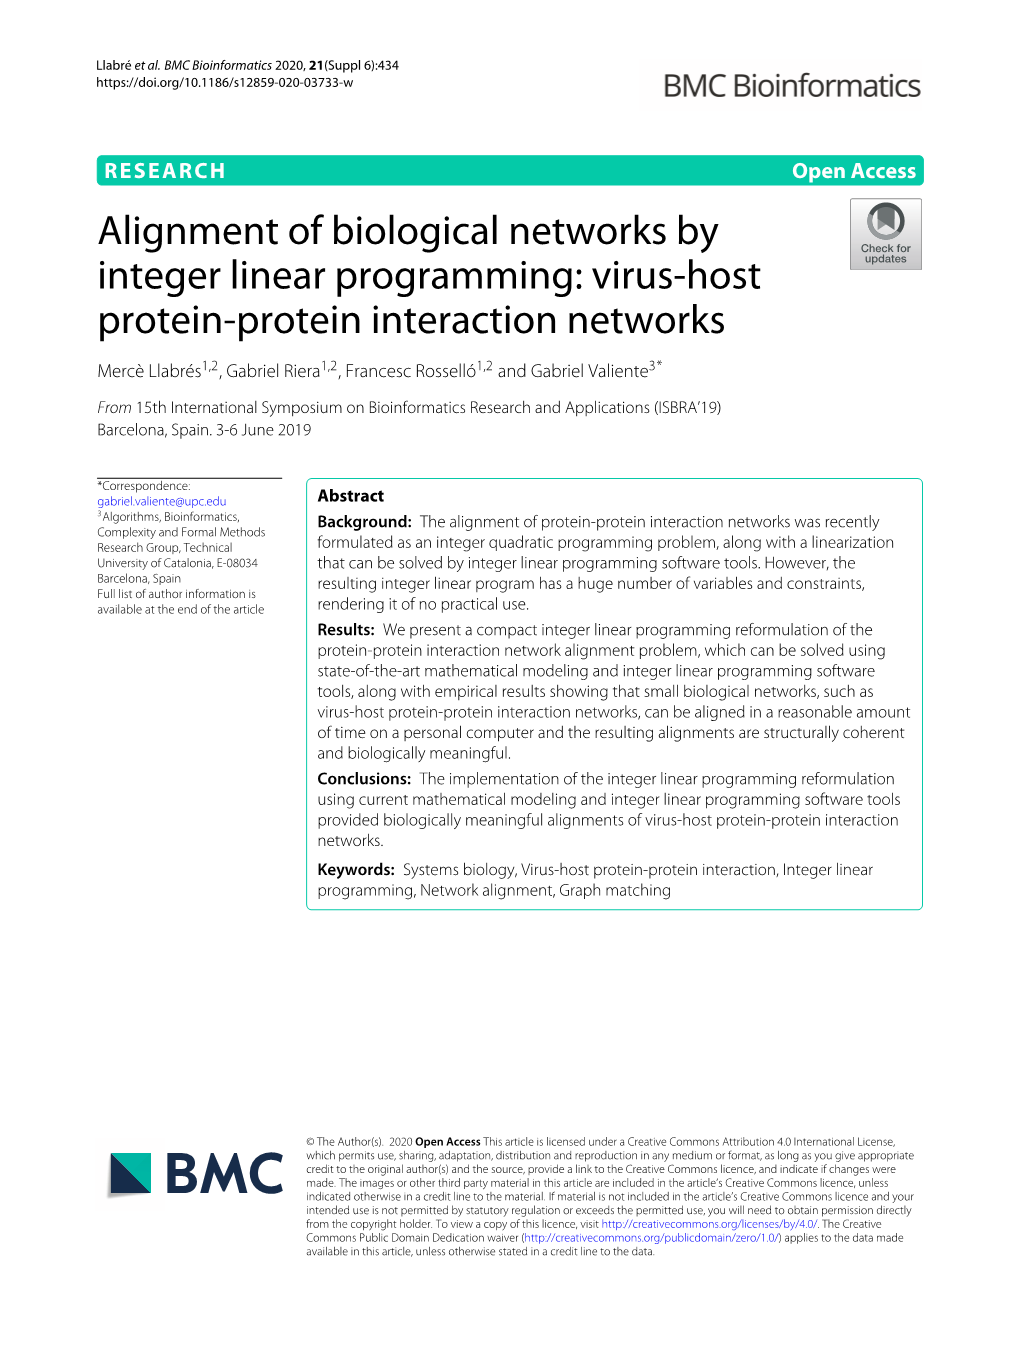 Virus-Host Protein-Protein Interaction Networks